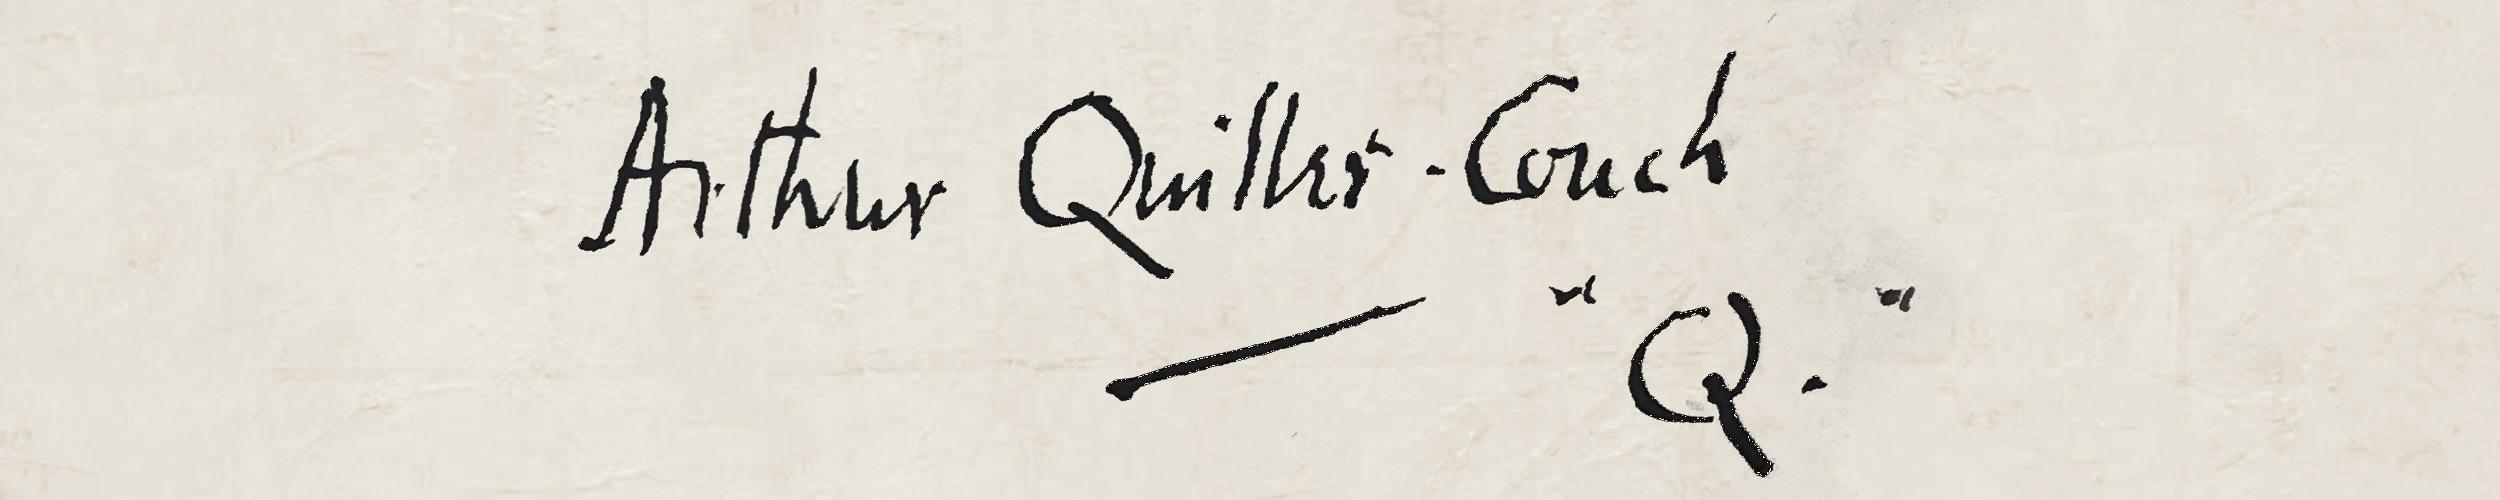 Arthur Quiller-Couch's Signature